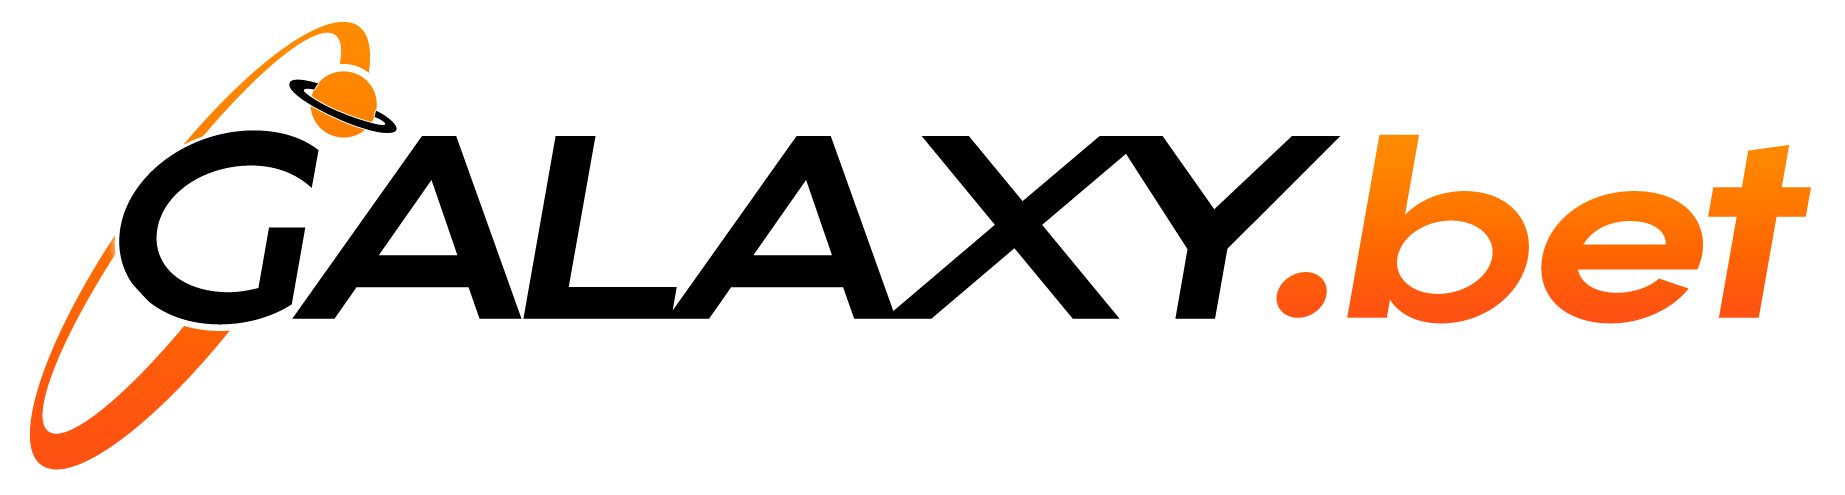 Galaxy Bet logo